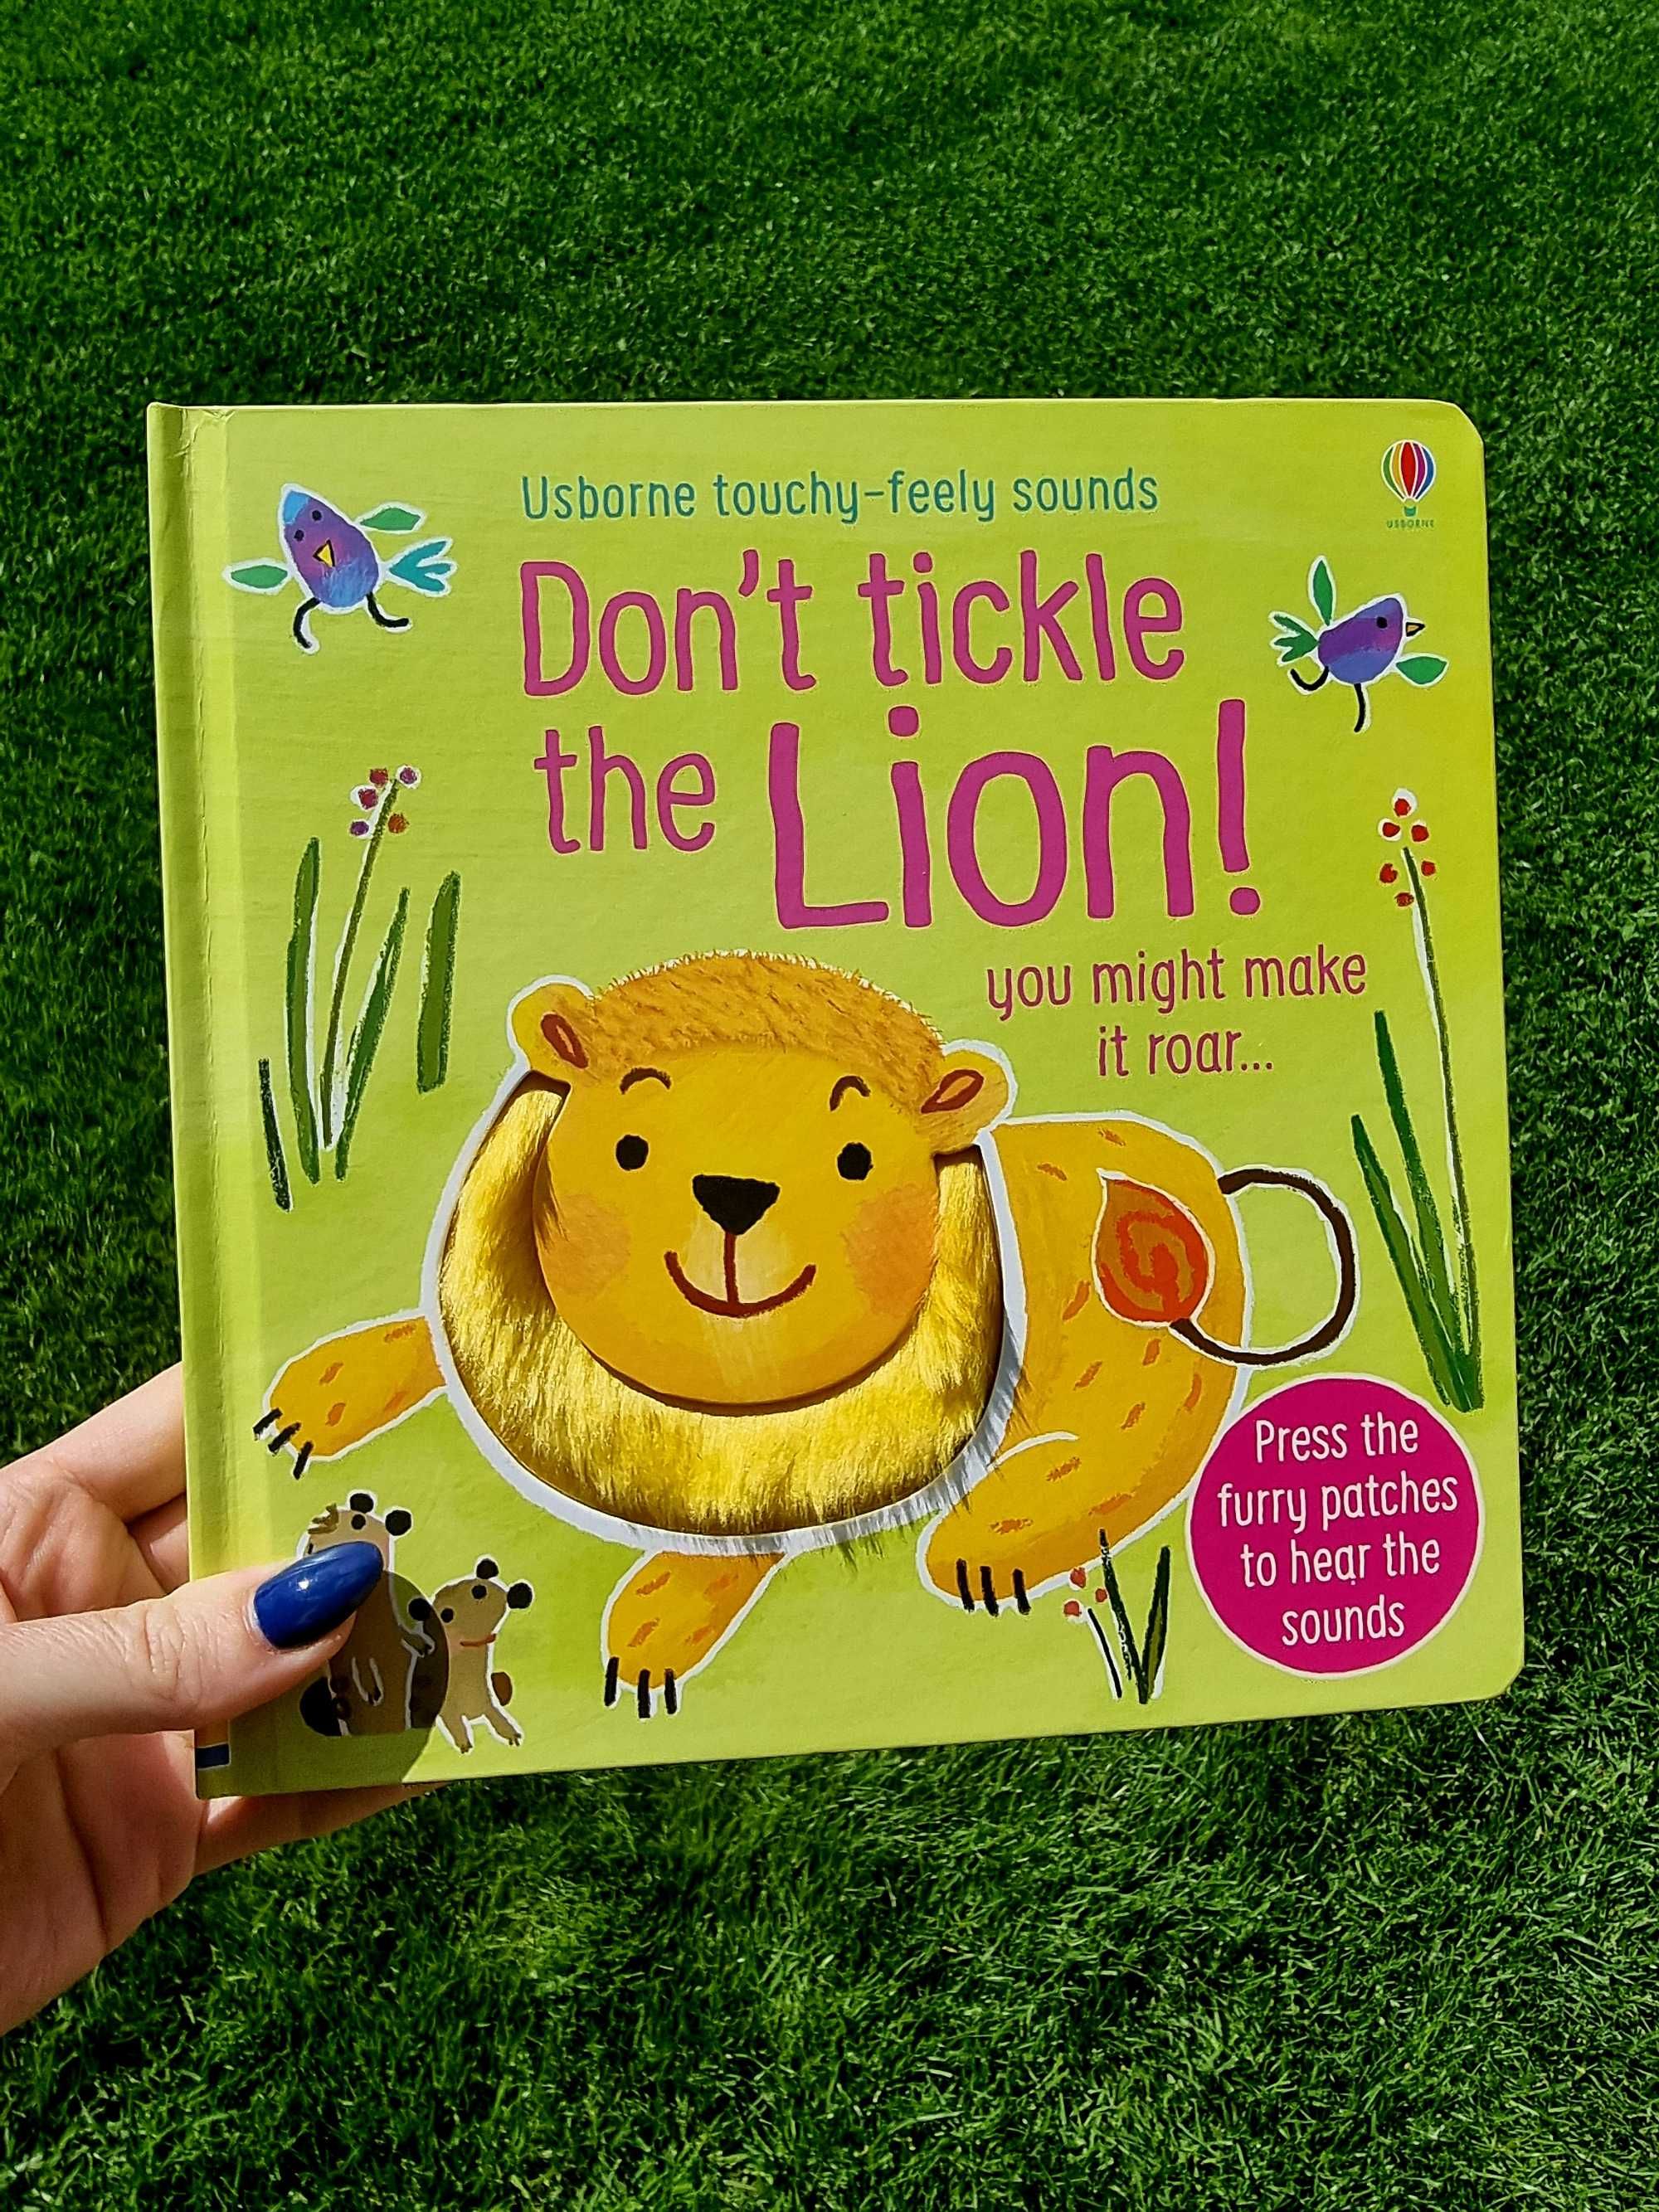 Don't tickle the Lion